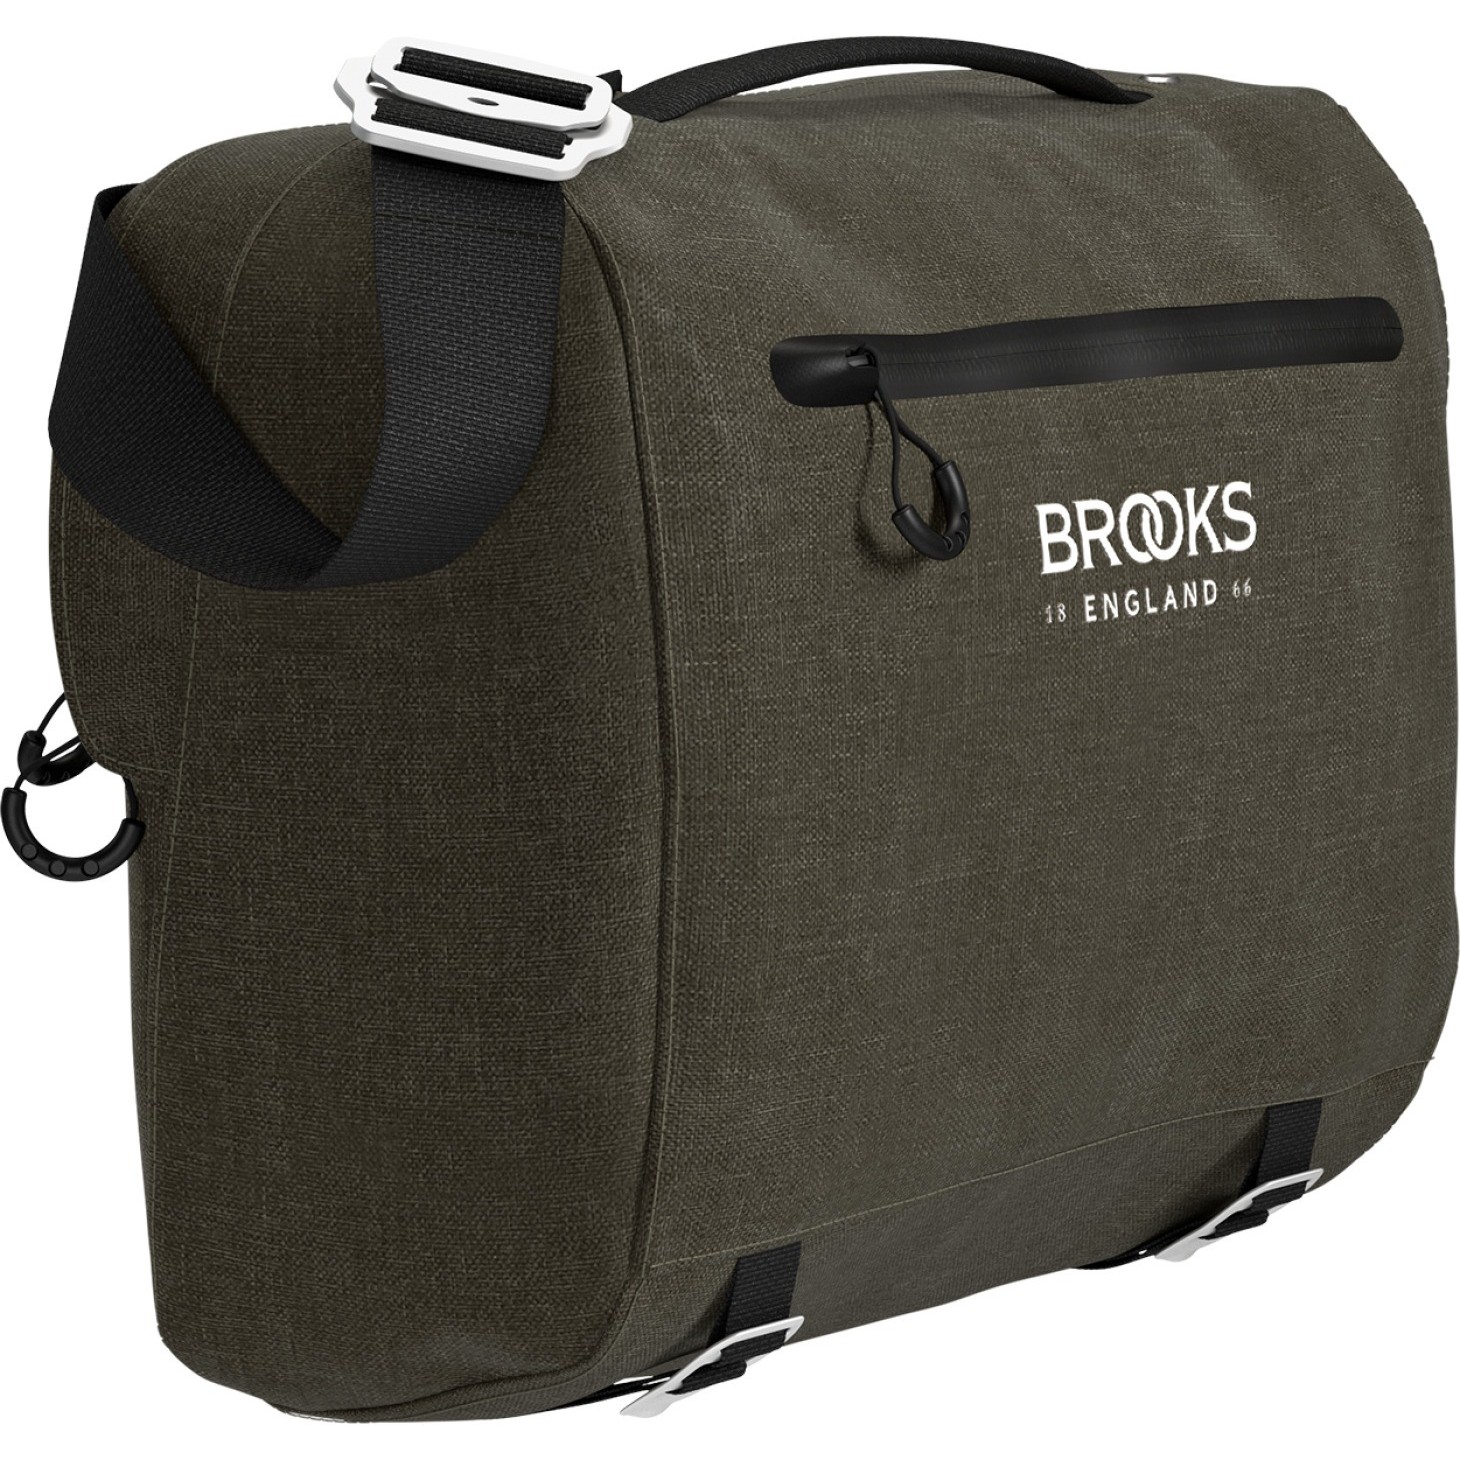 Productfoto van Brooks Scape Handlebar Compact Bag - mud green